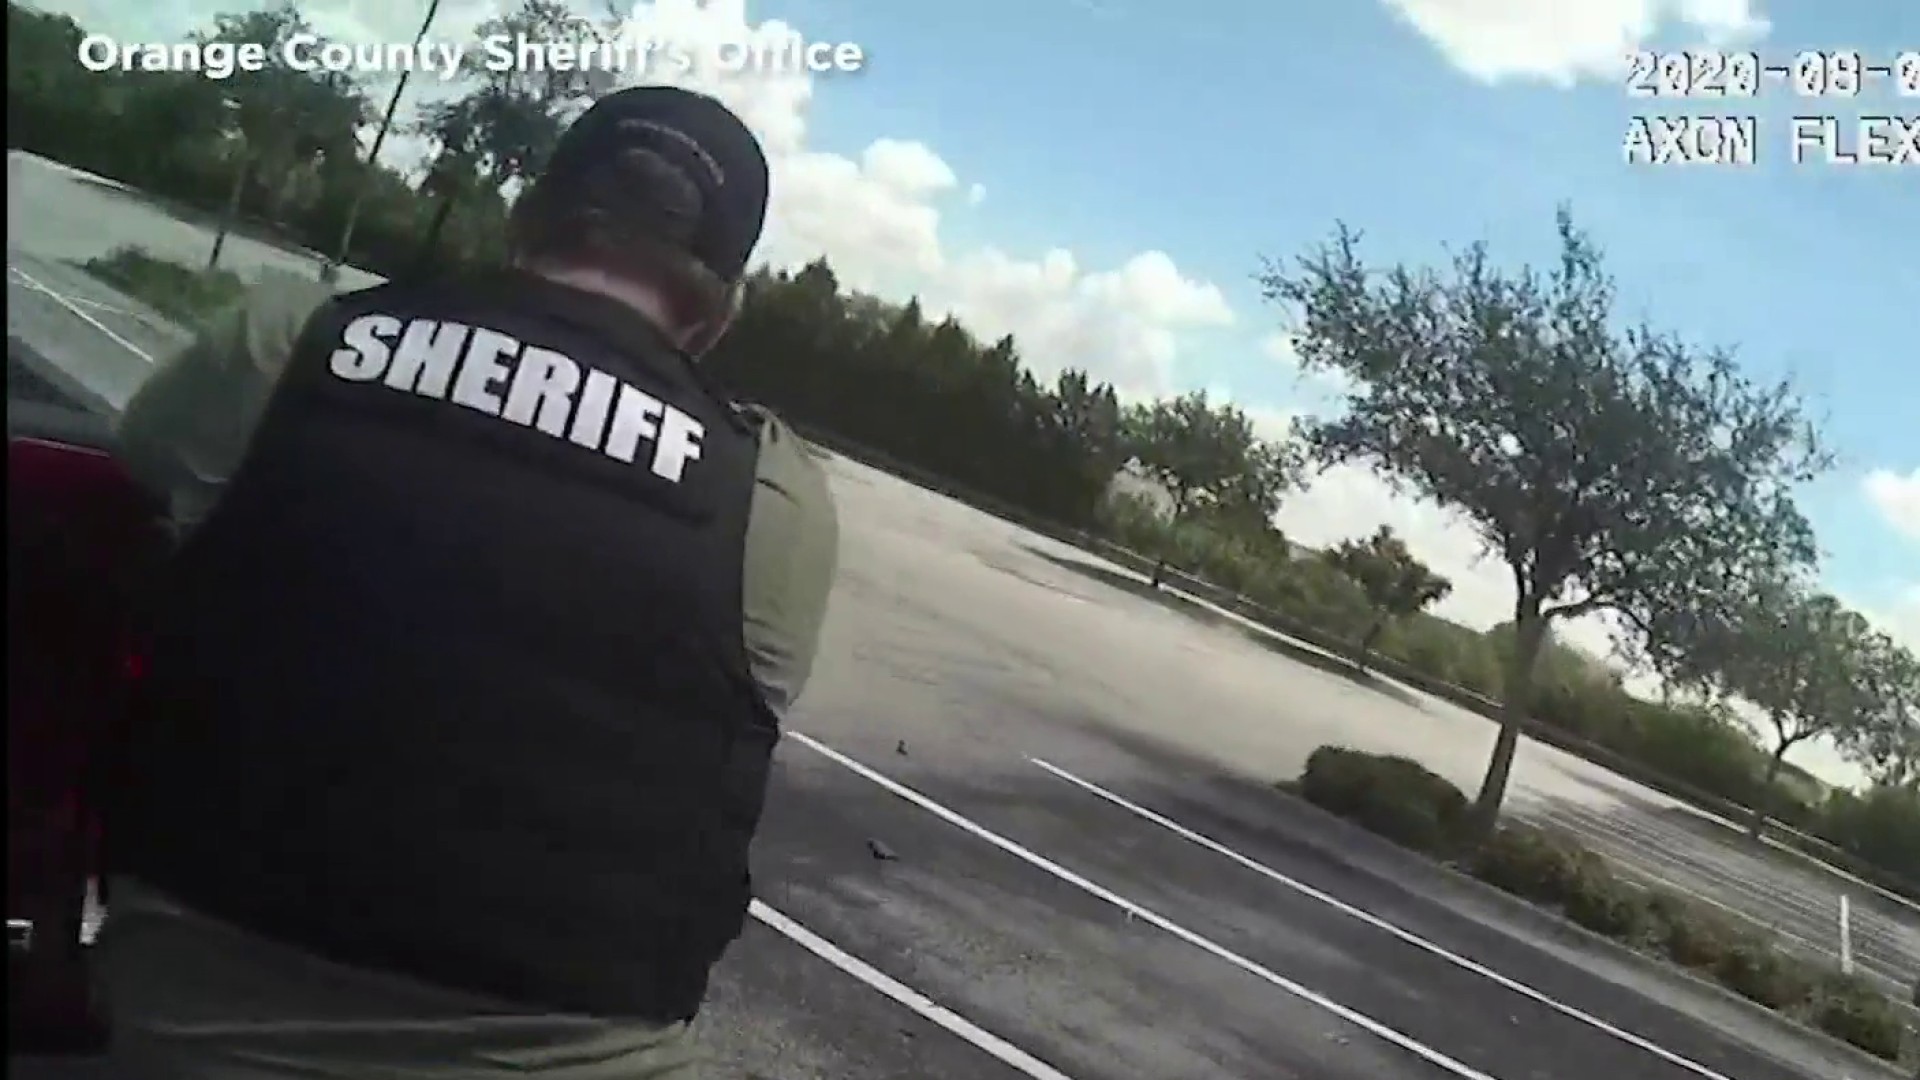 Police: No evidence of shooting after Florida mall lockdown